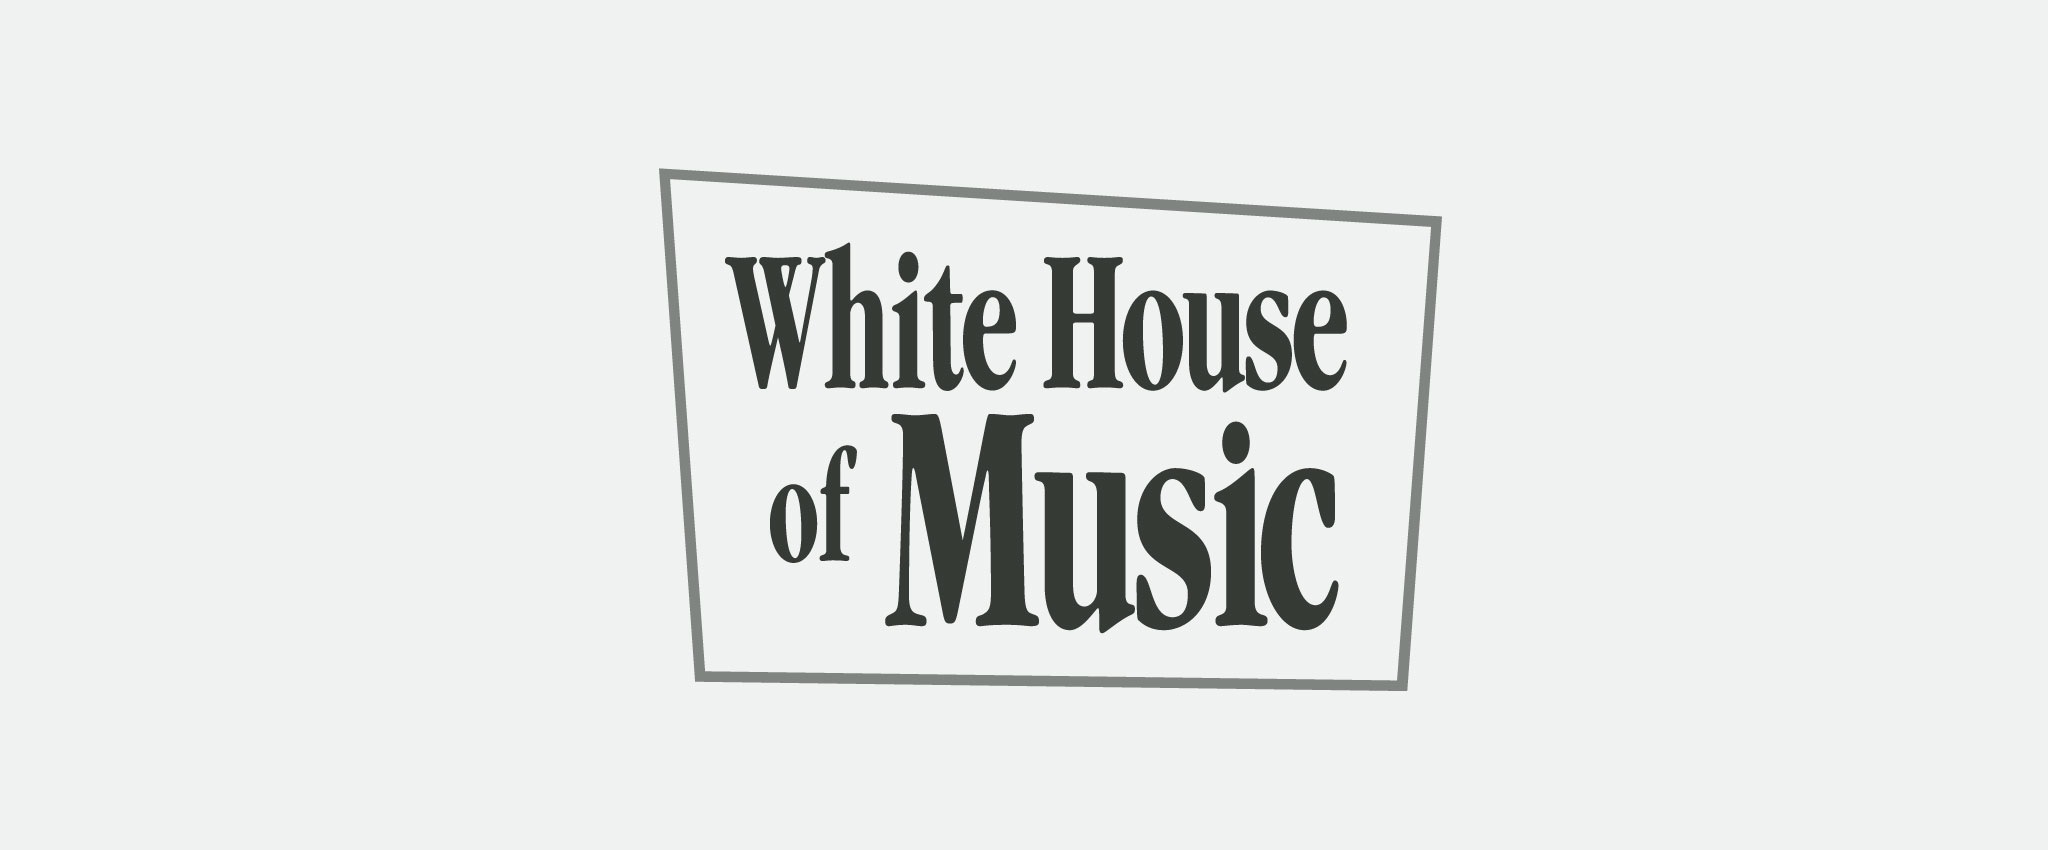 White House of Music logo stacks, white